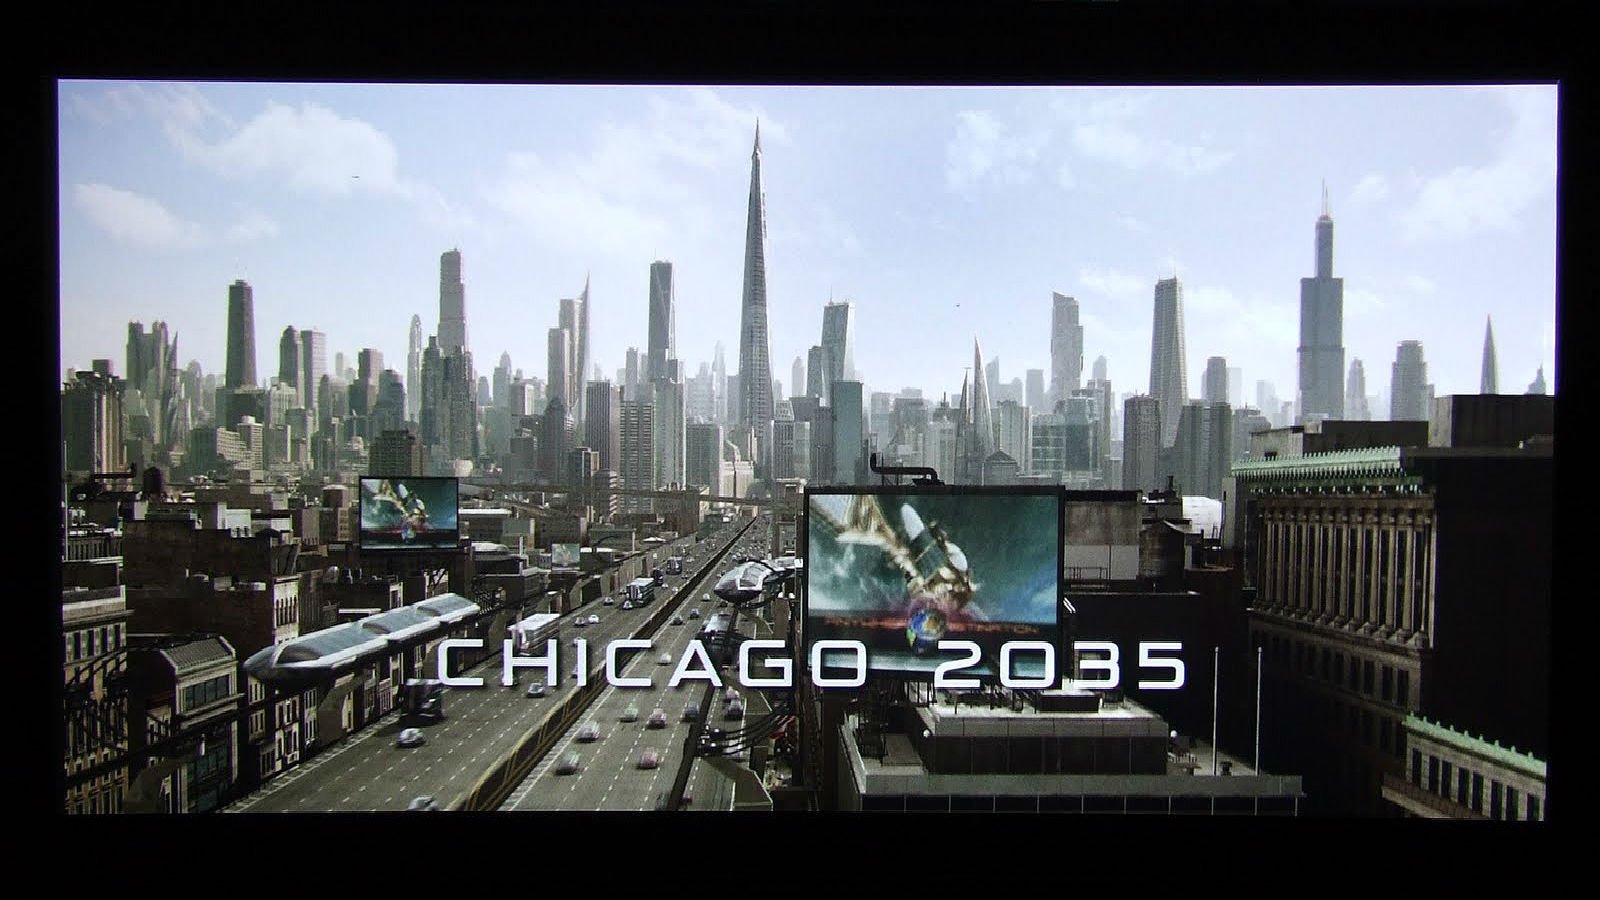 i robot, Action, Mystery, Sci fi, Futuristic, Robot, Technics, 1irobot, Crime, Dystopian, City, Cities, Chicago Wallpaper